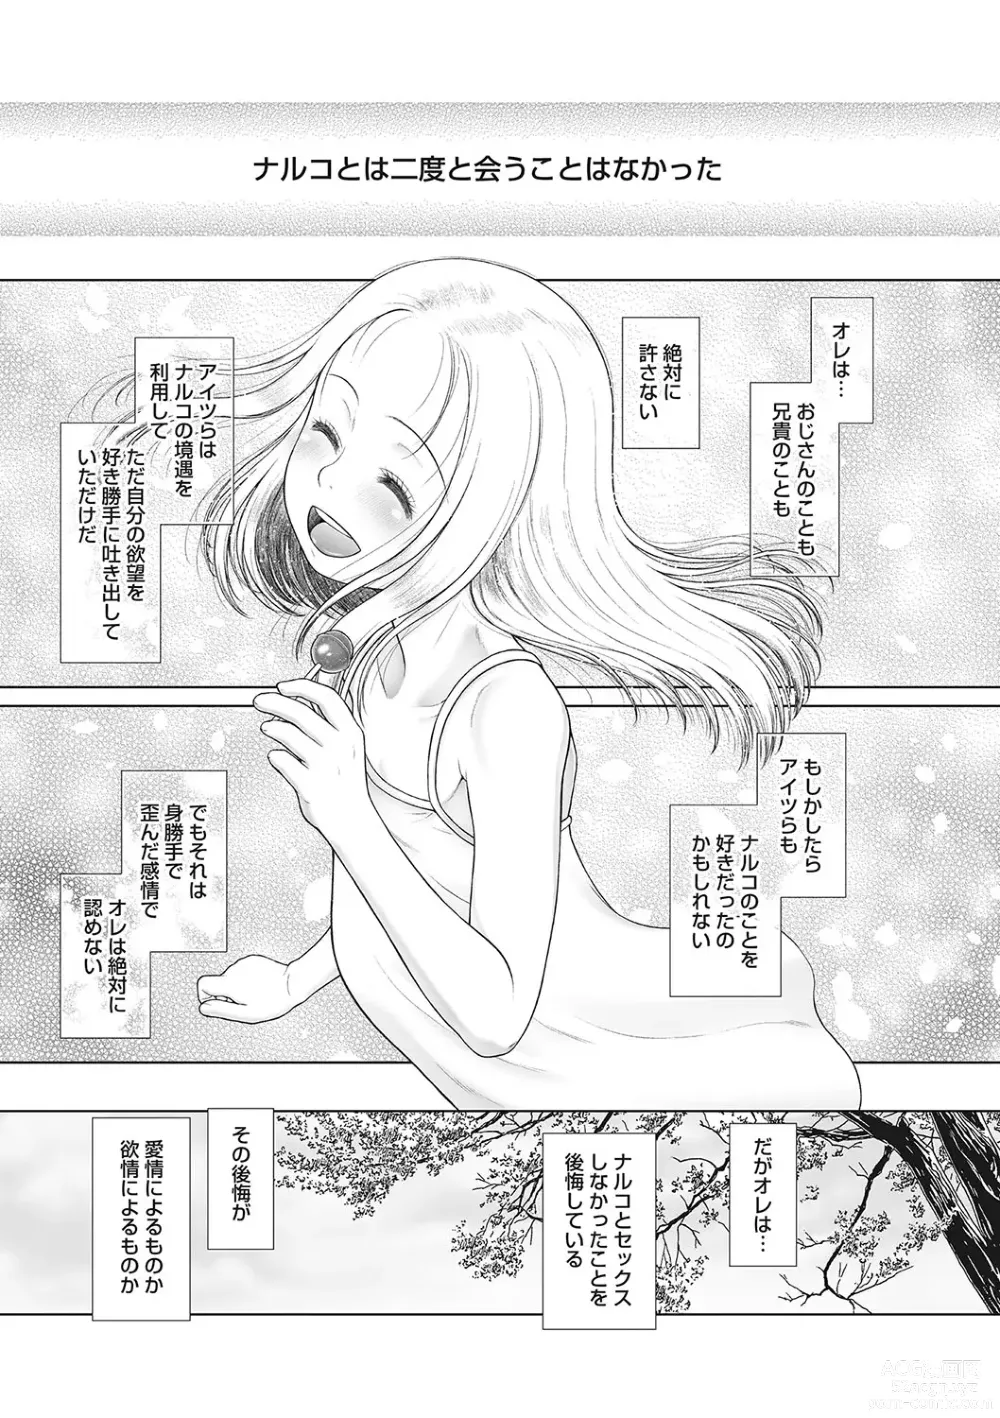 Page 90 of manga Little Girl Strike Vol. 29